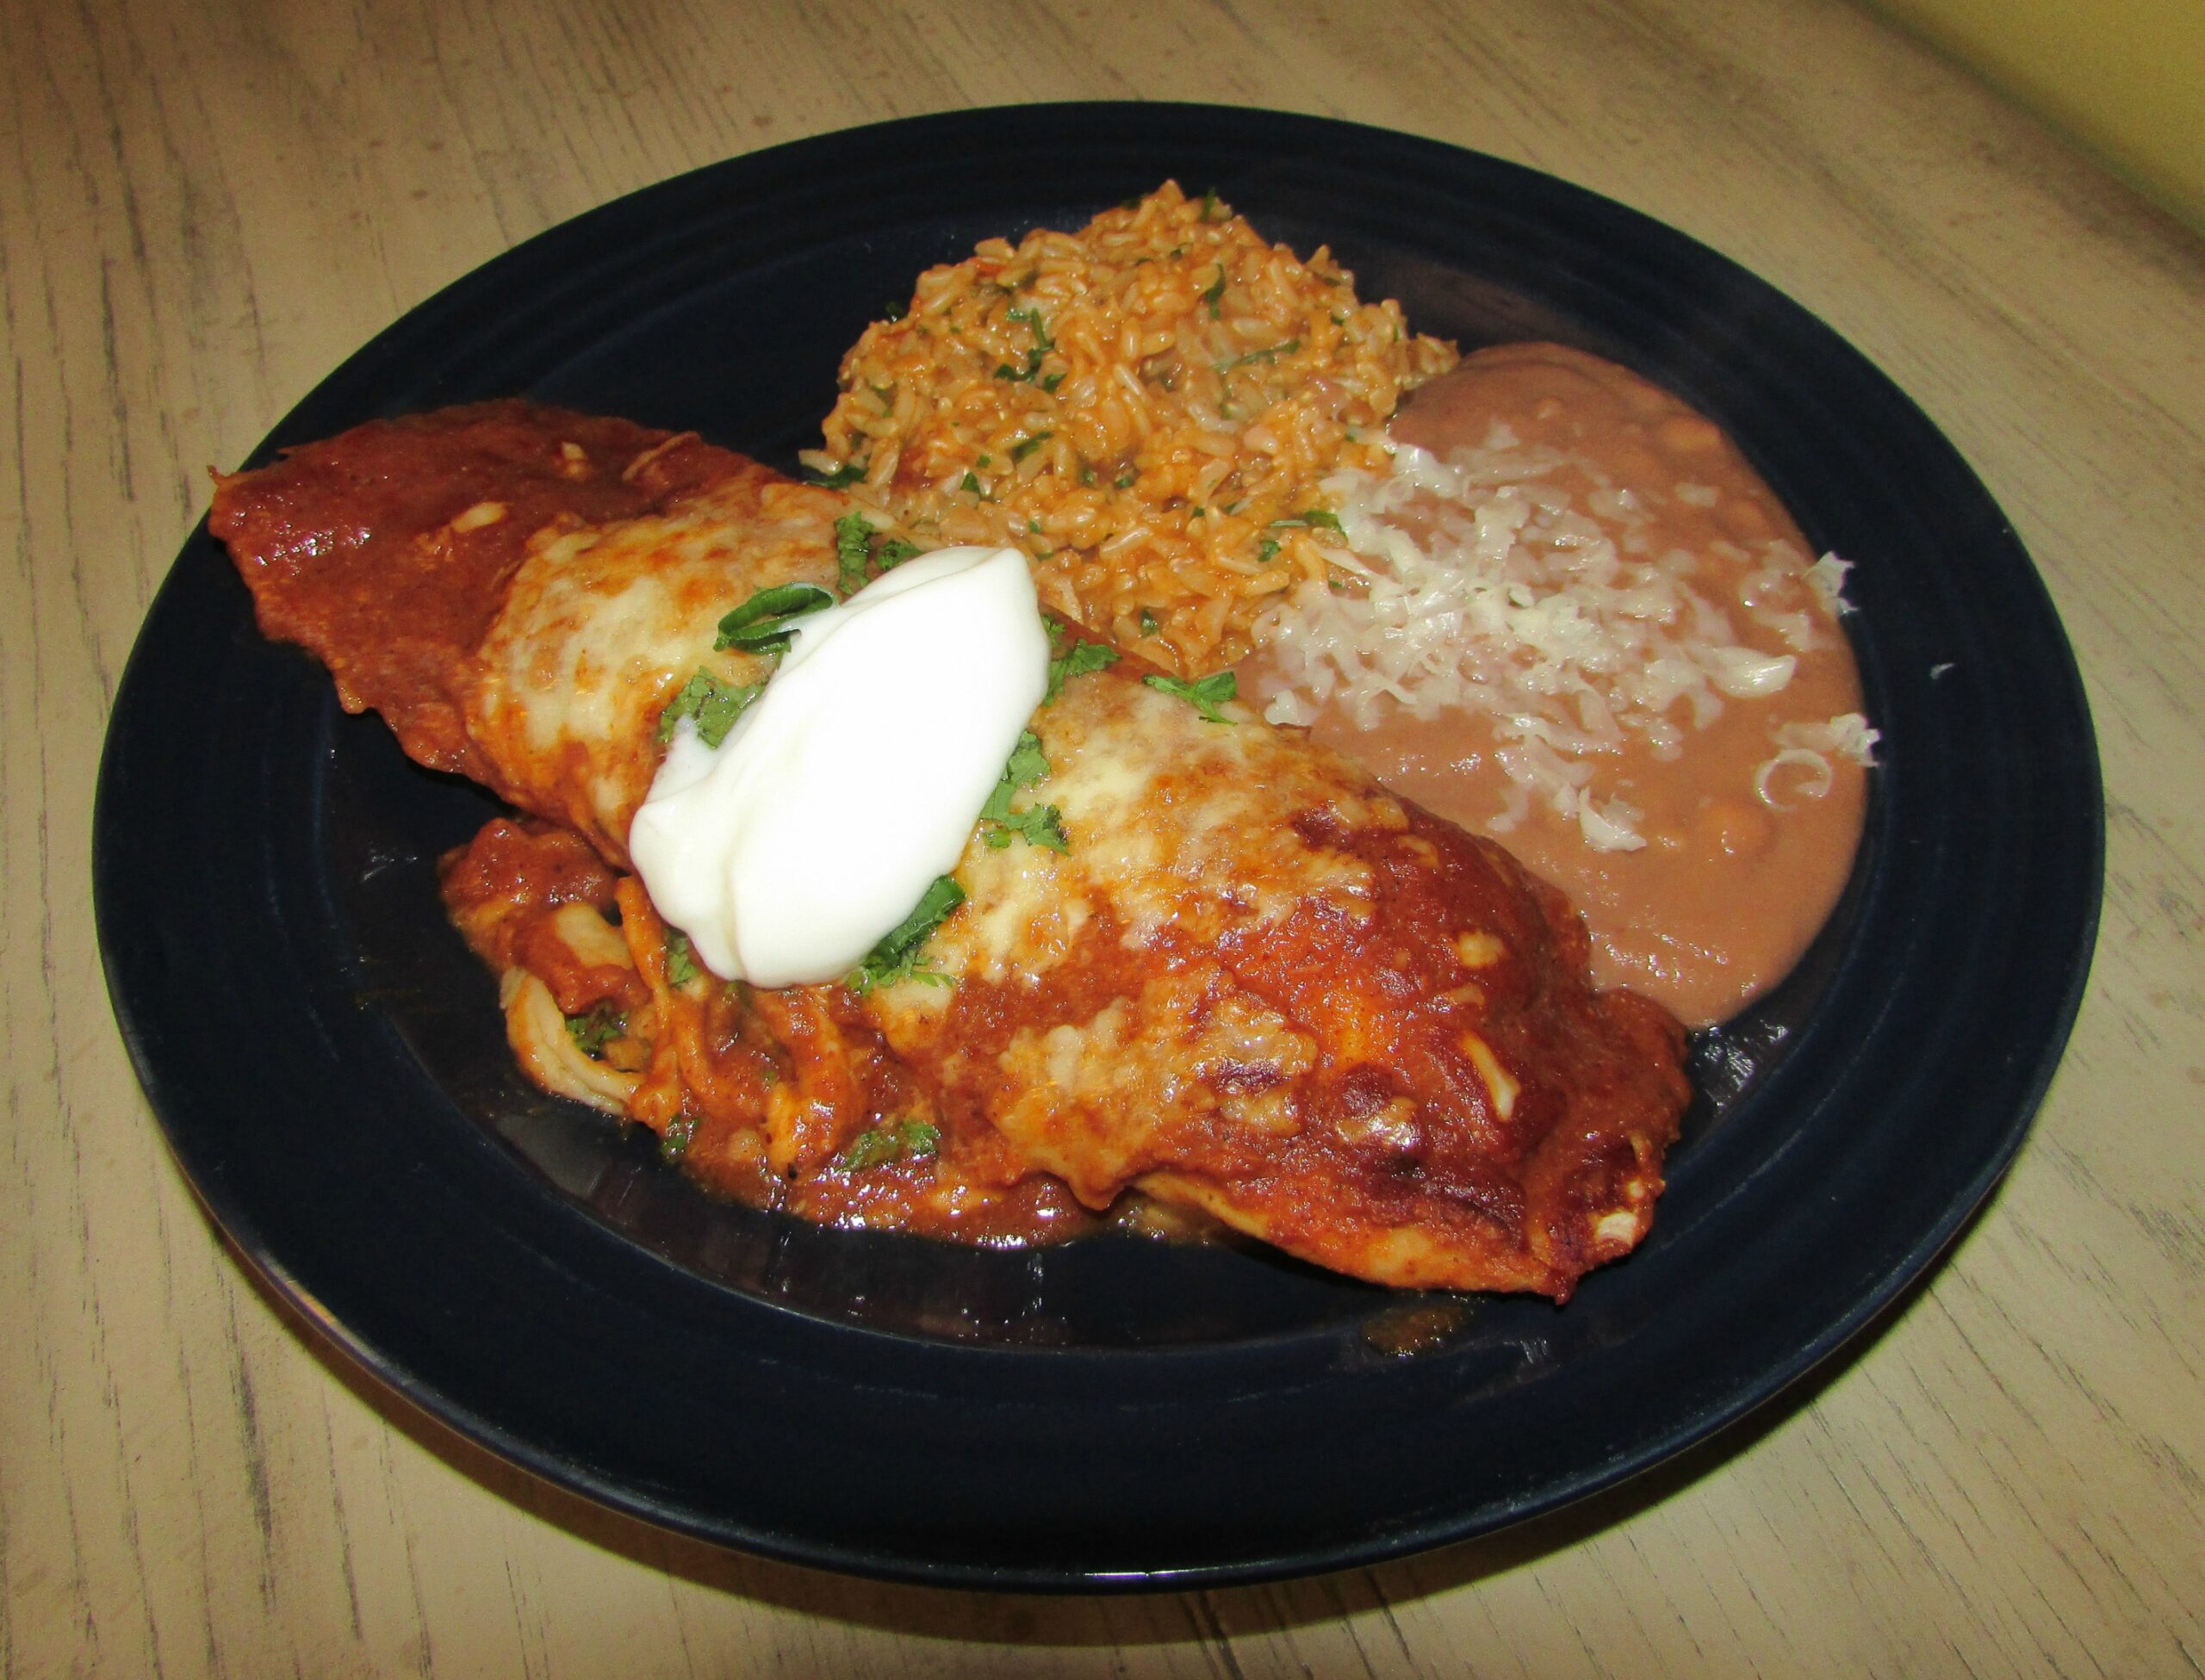 Chicken enchilada dinner, ready to eat.